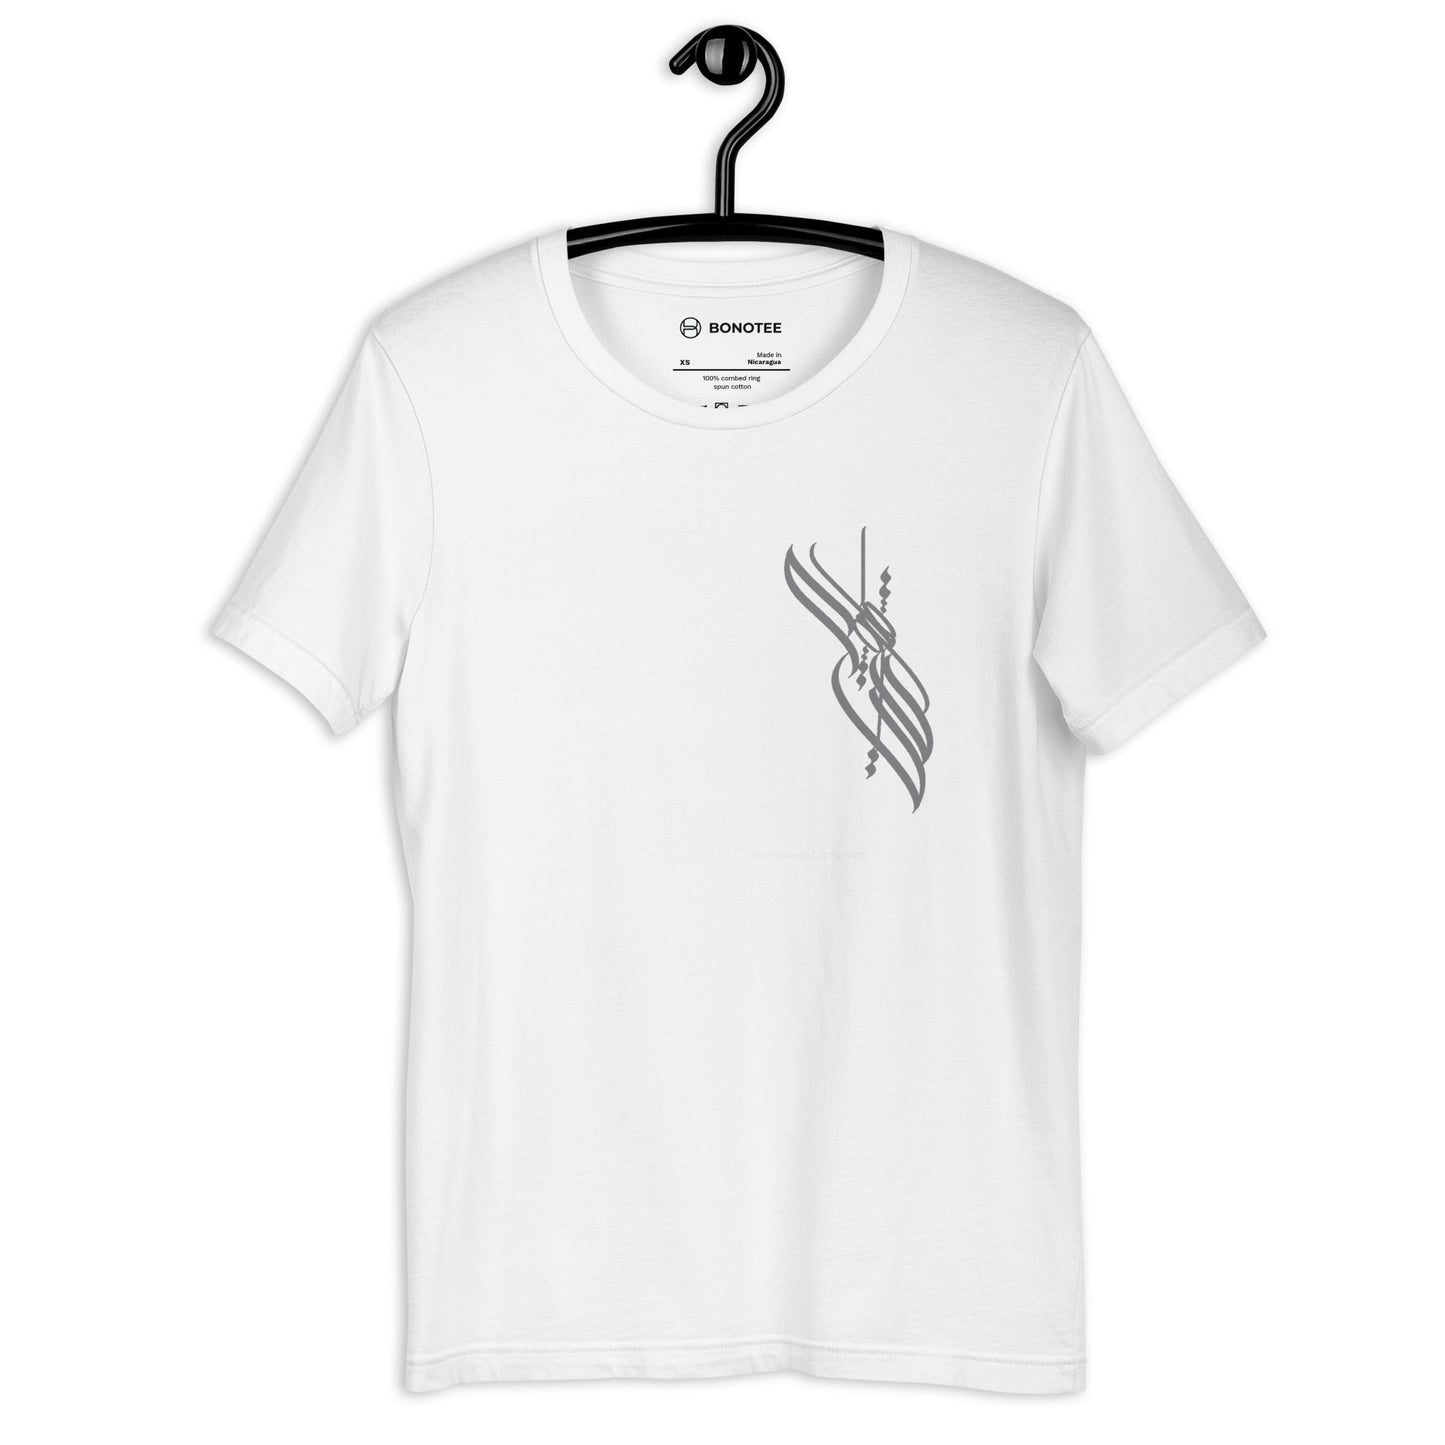 PASSION Unisex T-Shirt - Bonotee